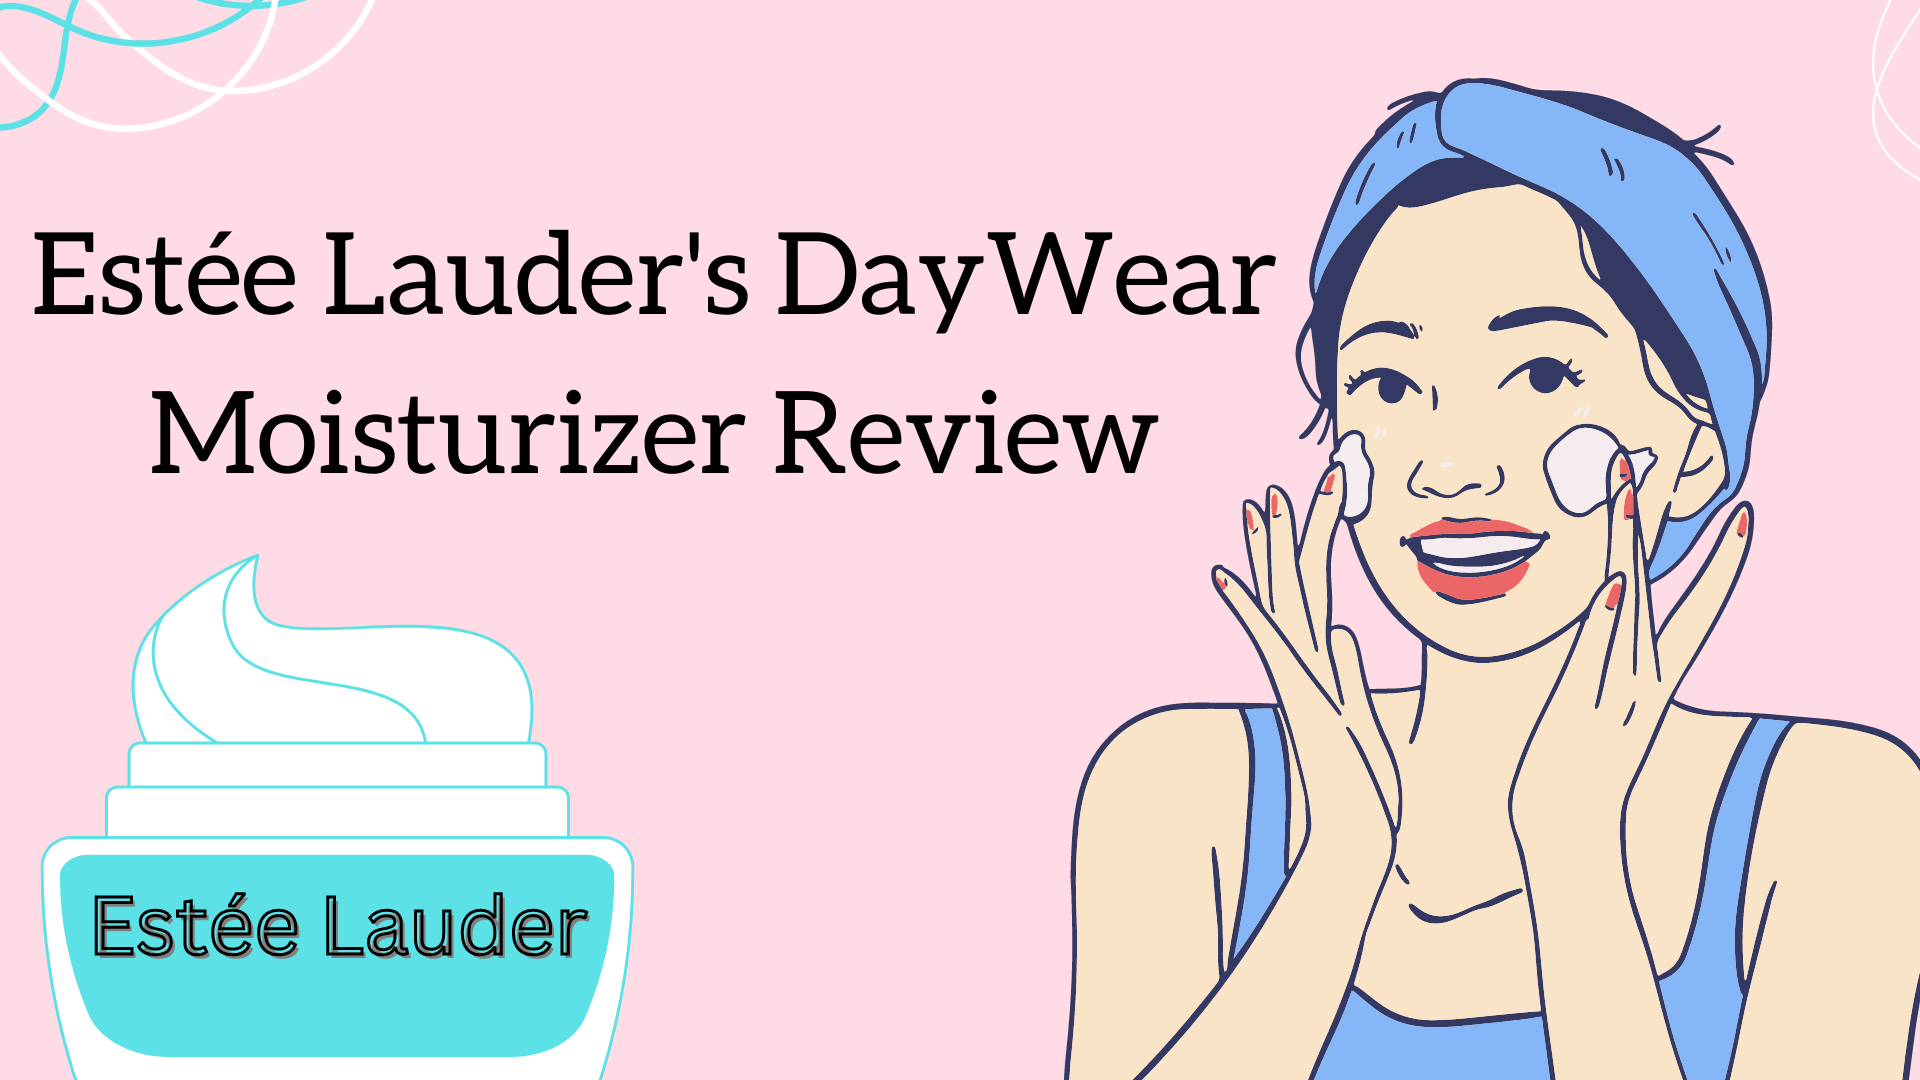 Estee Lauder Daywear Plus Review